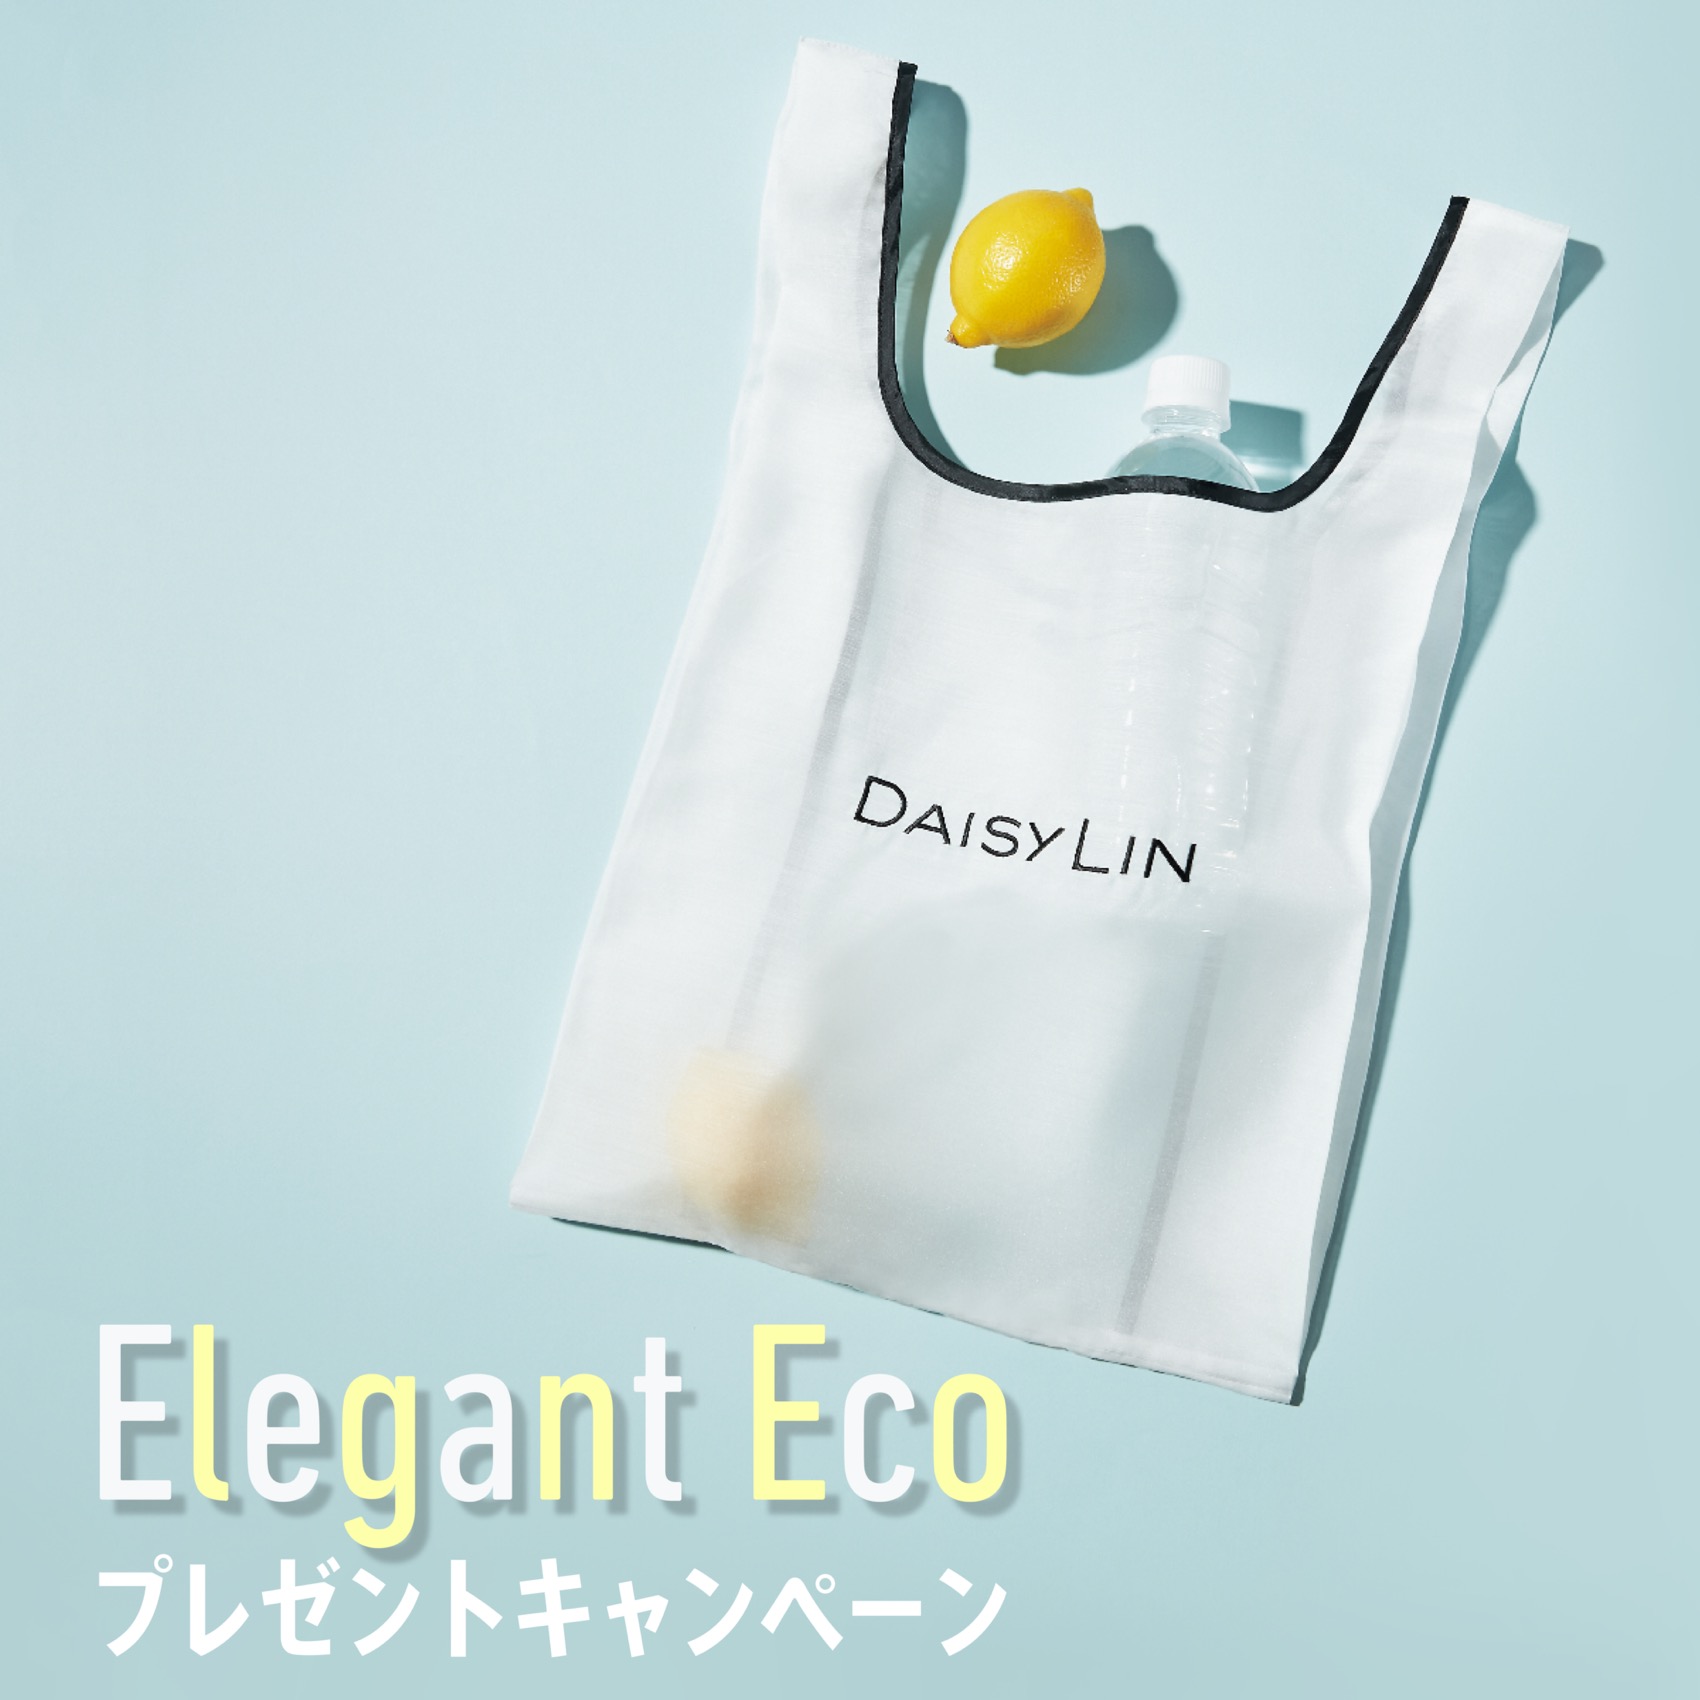 Elegant Ecoプレゼントキャンペーン